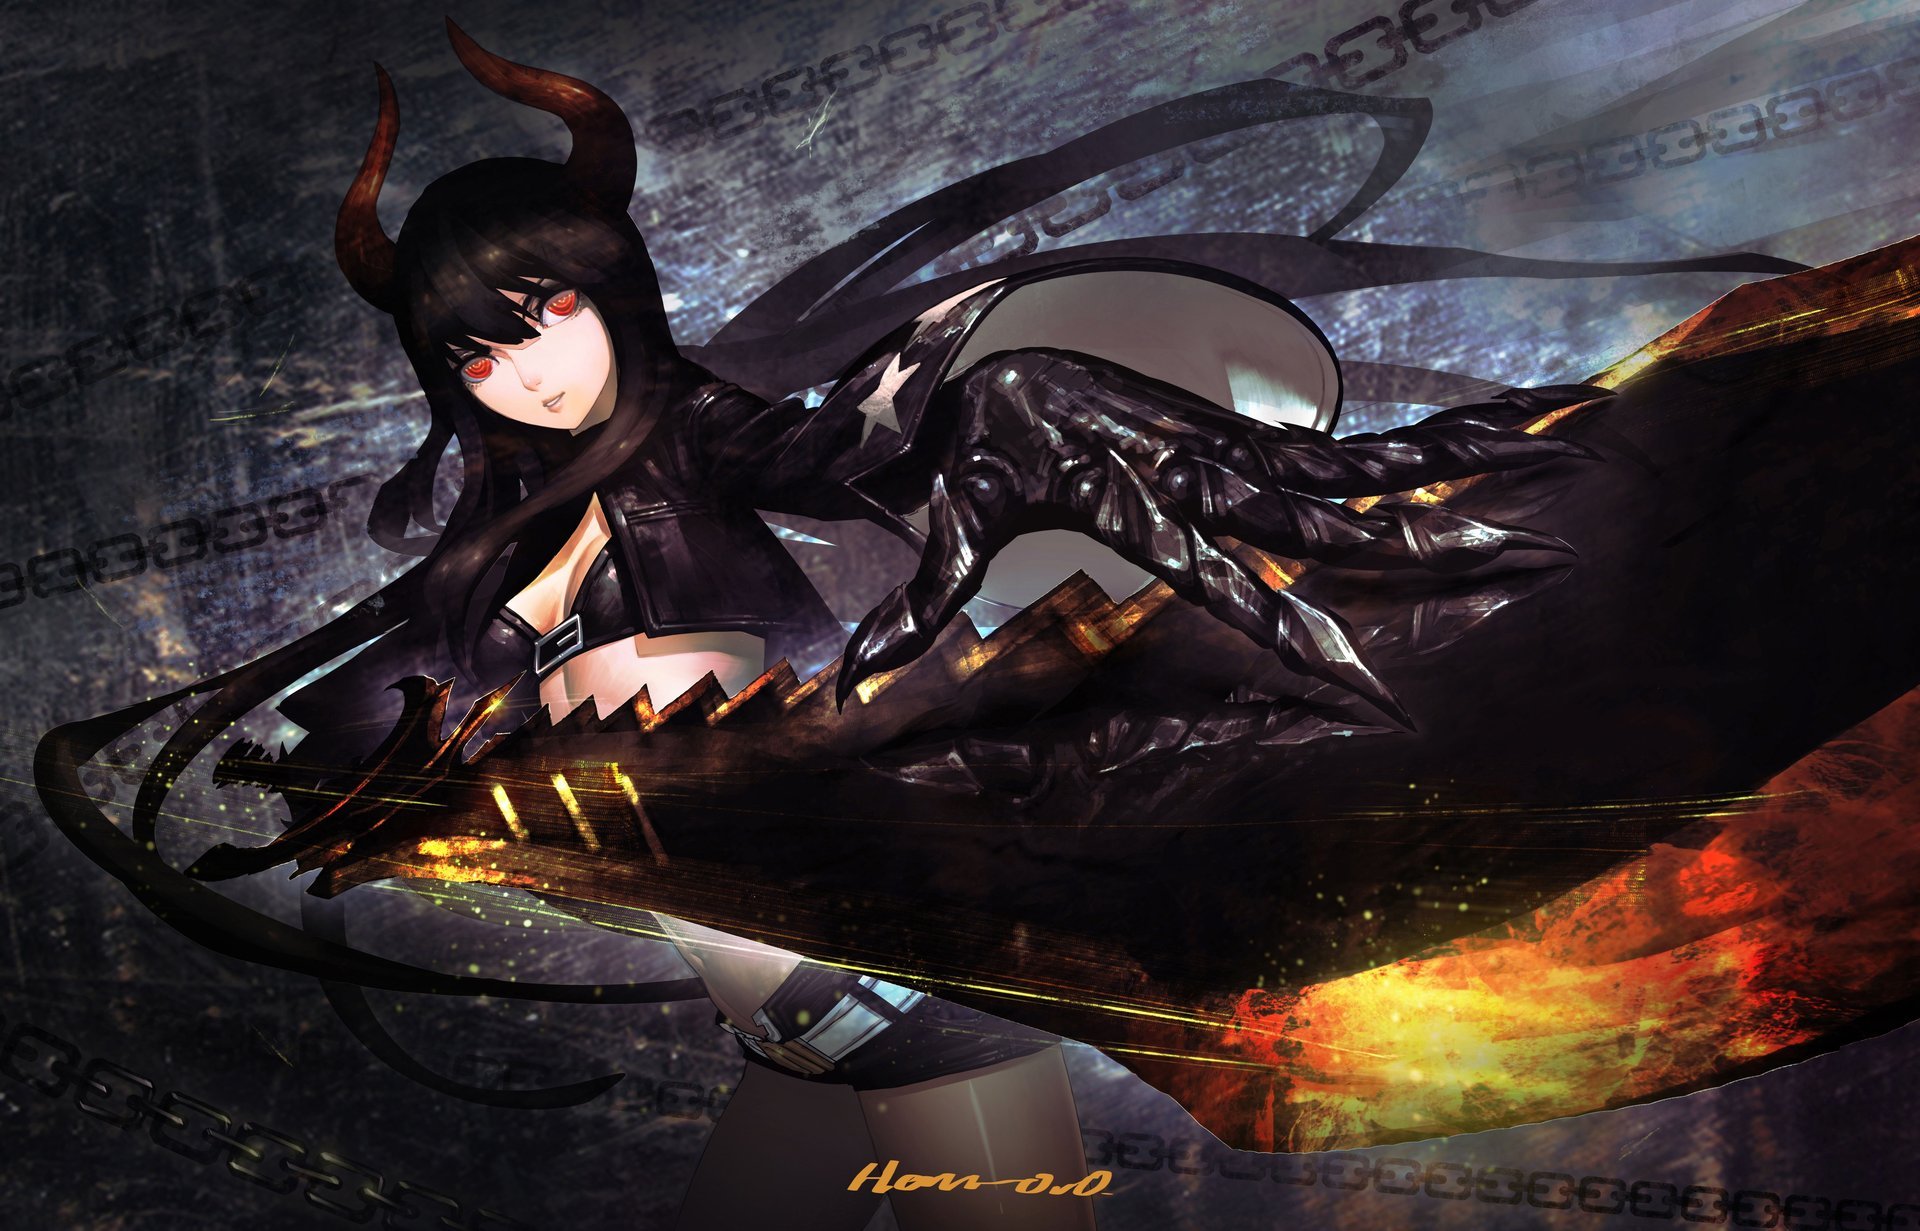 art anime black rock shooter black gold saw girl horn sword weapon chains